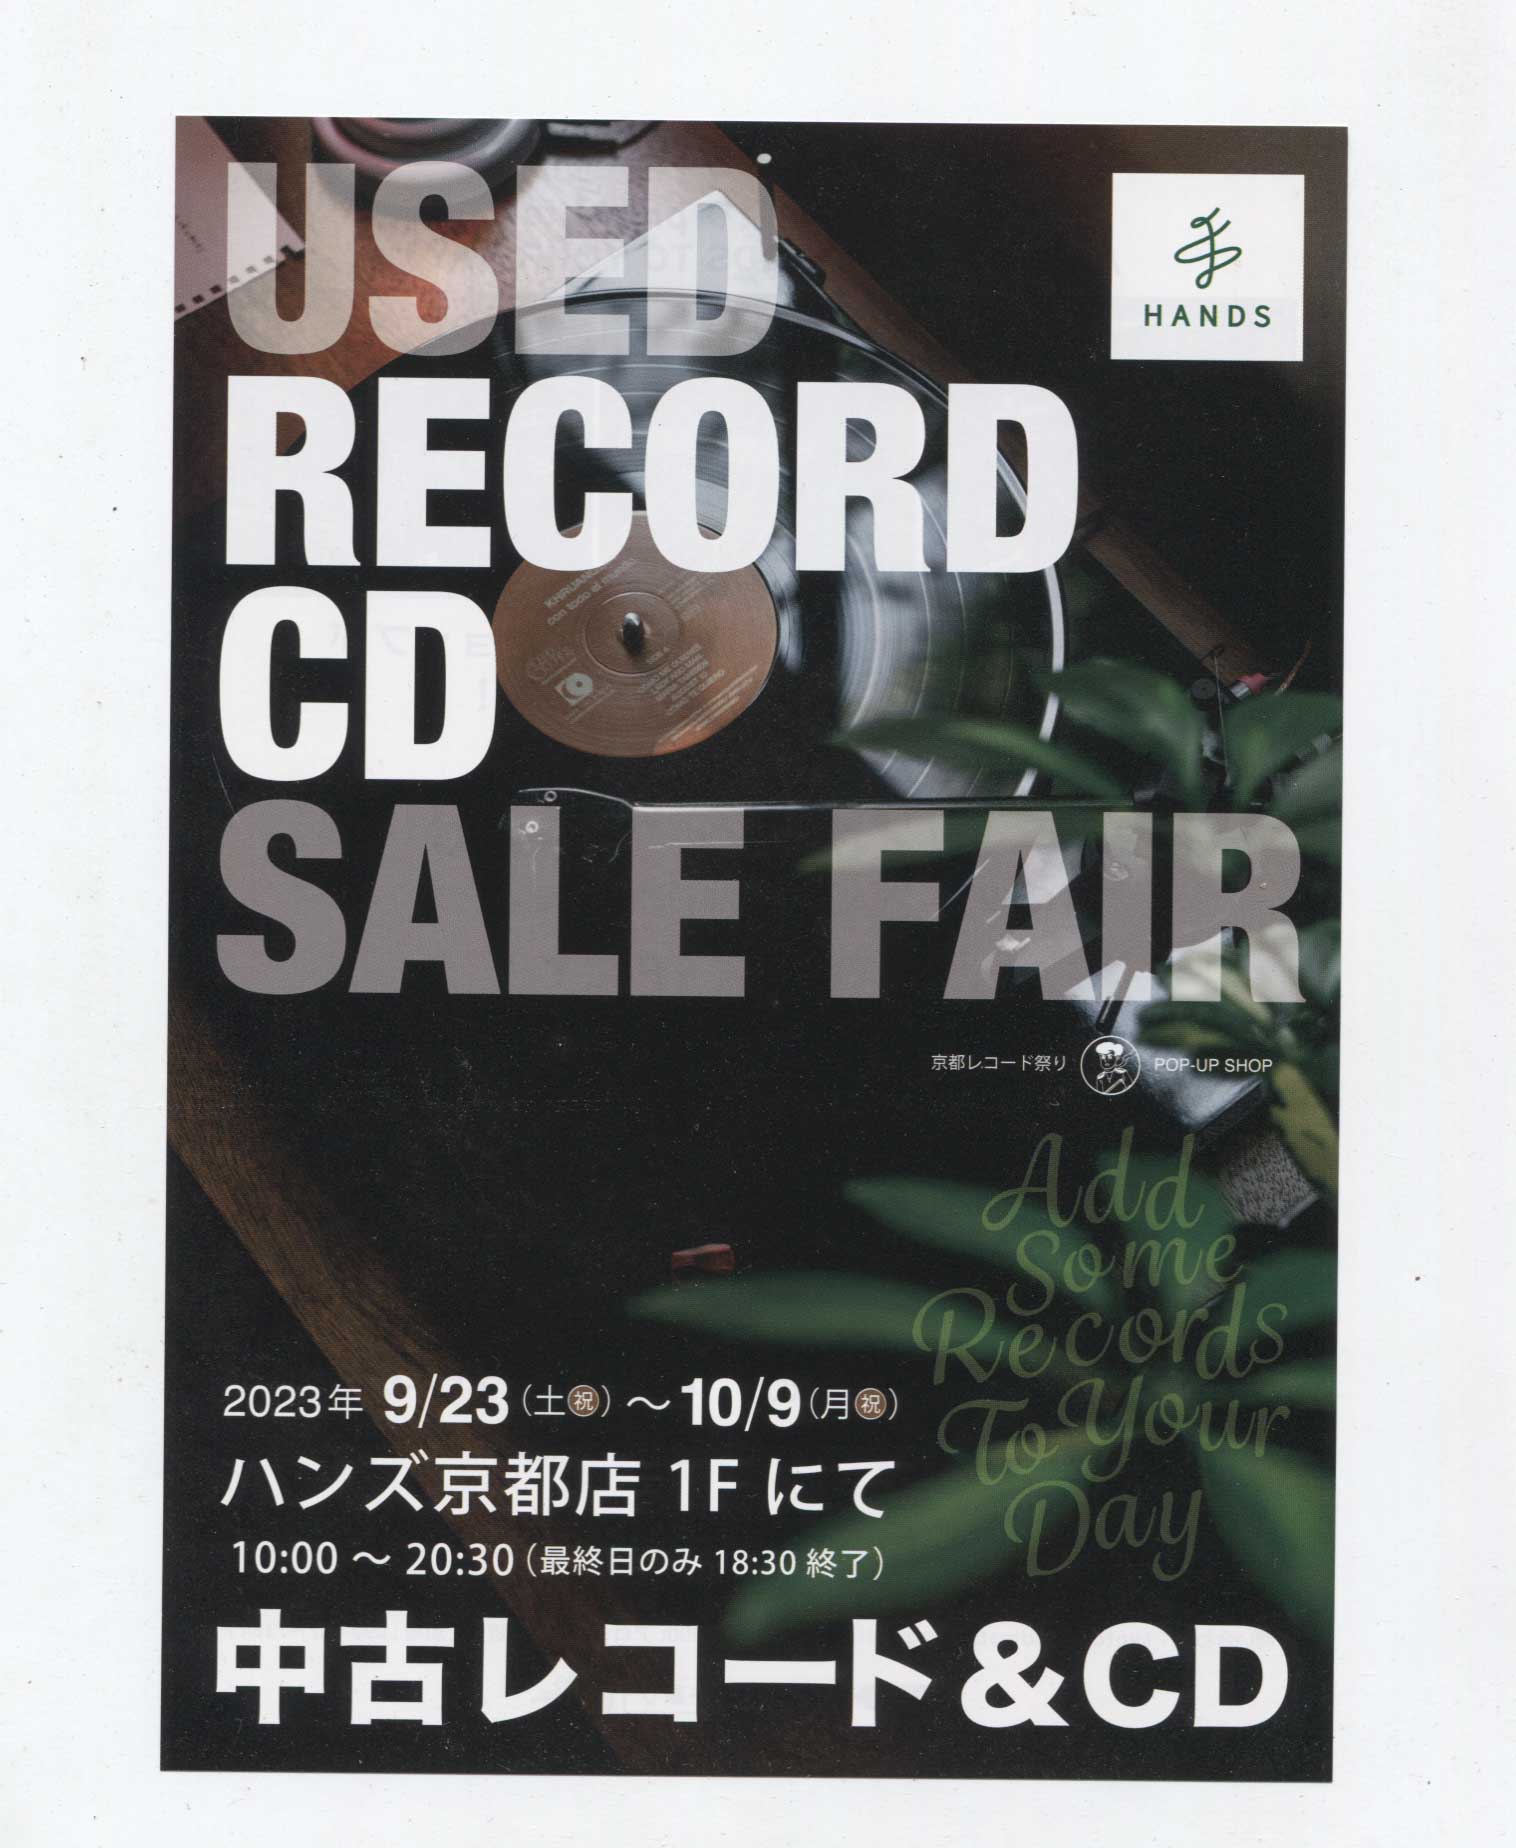 USED RECORD CD SALES FAIR